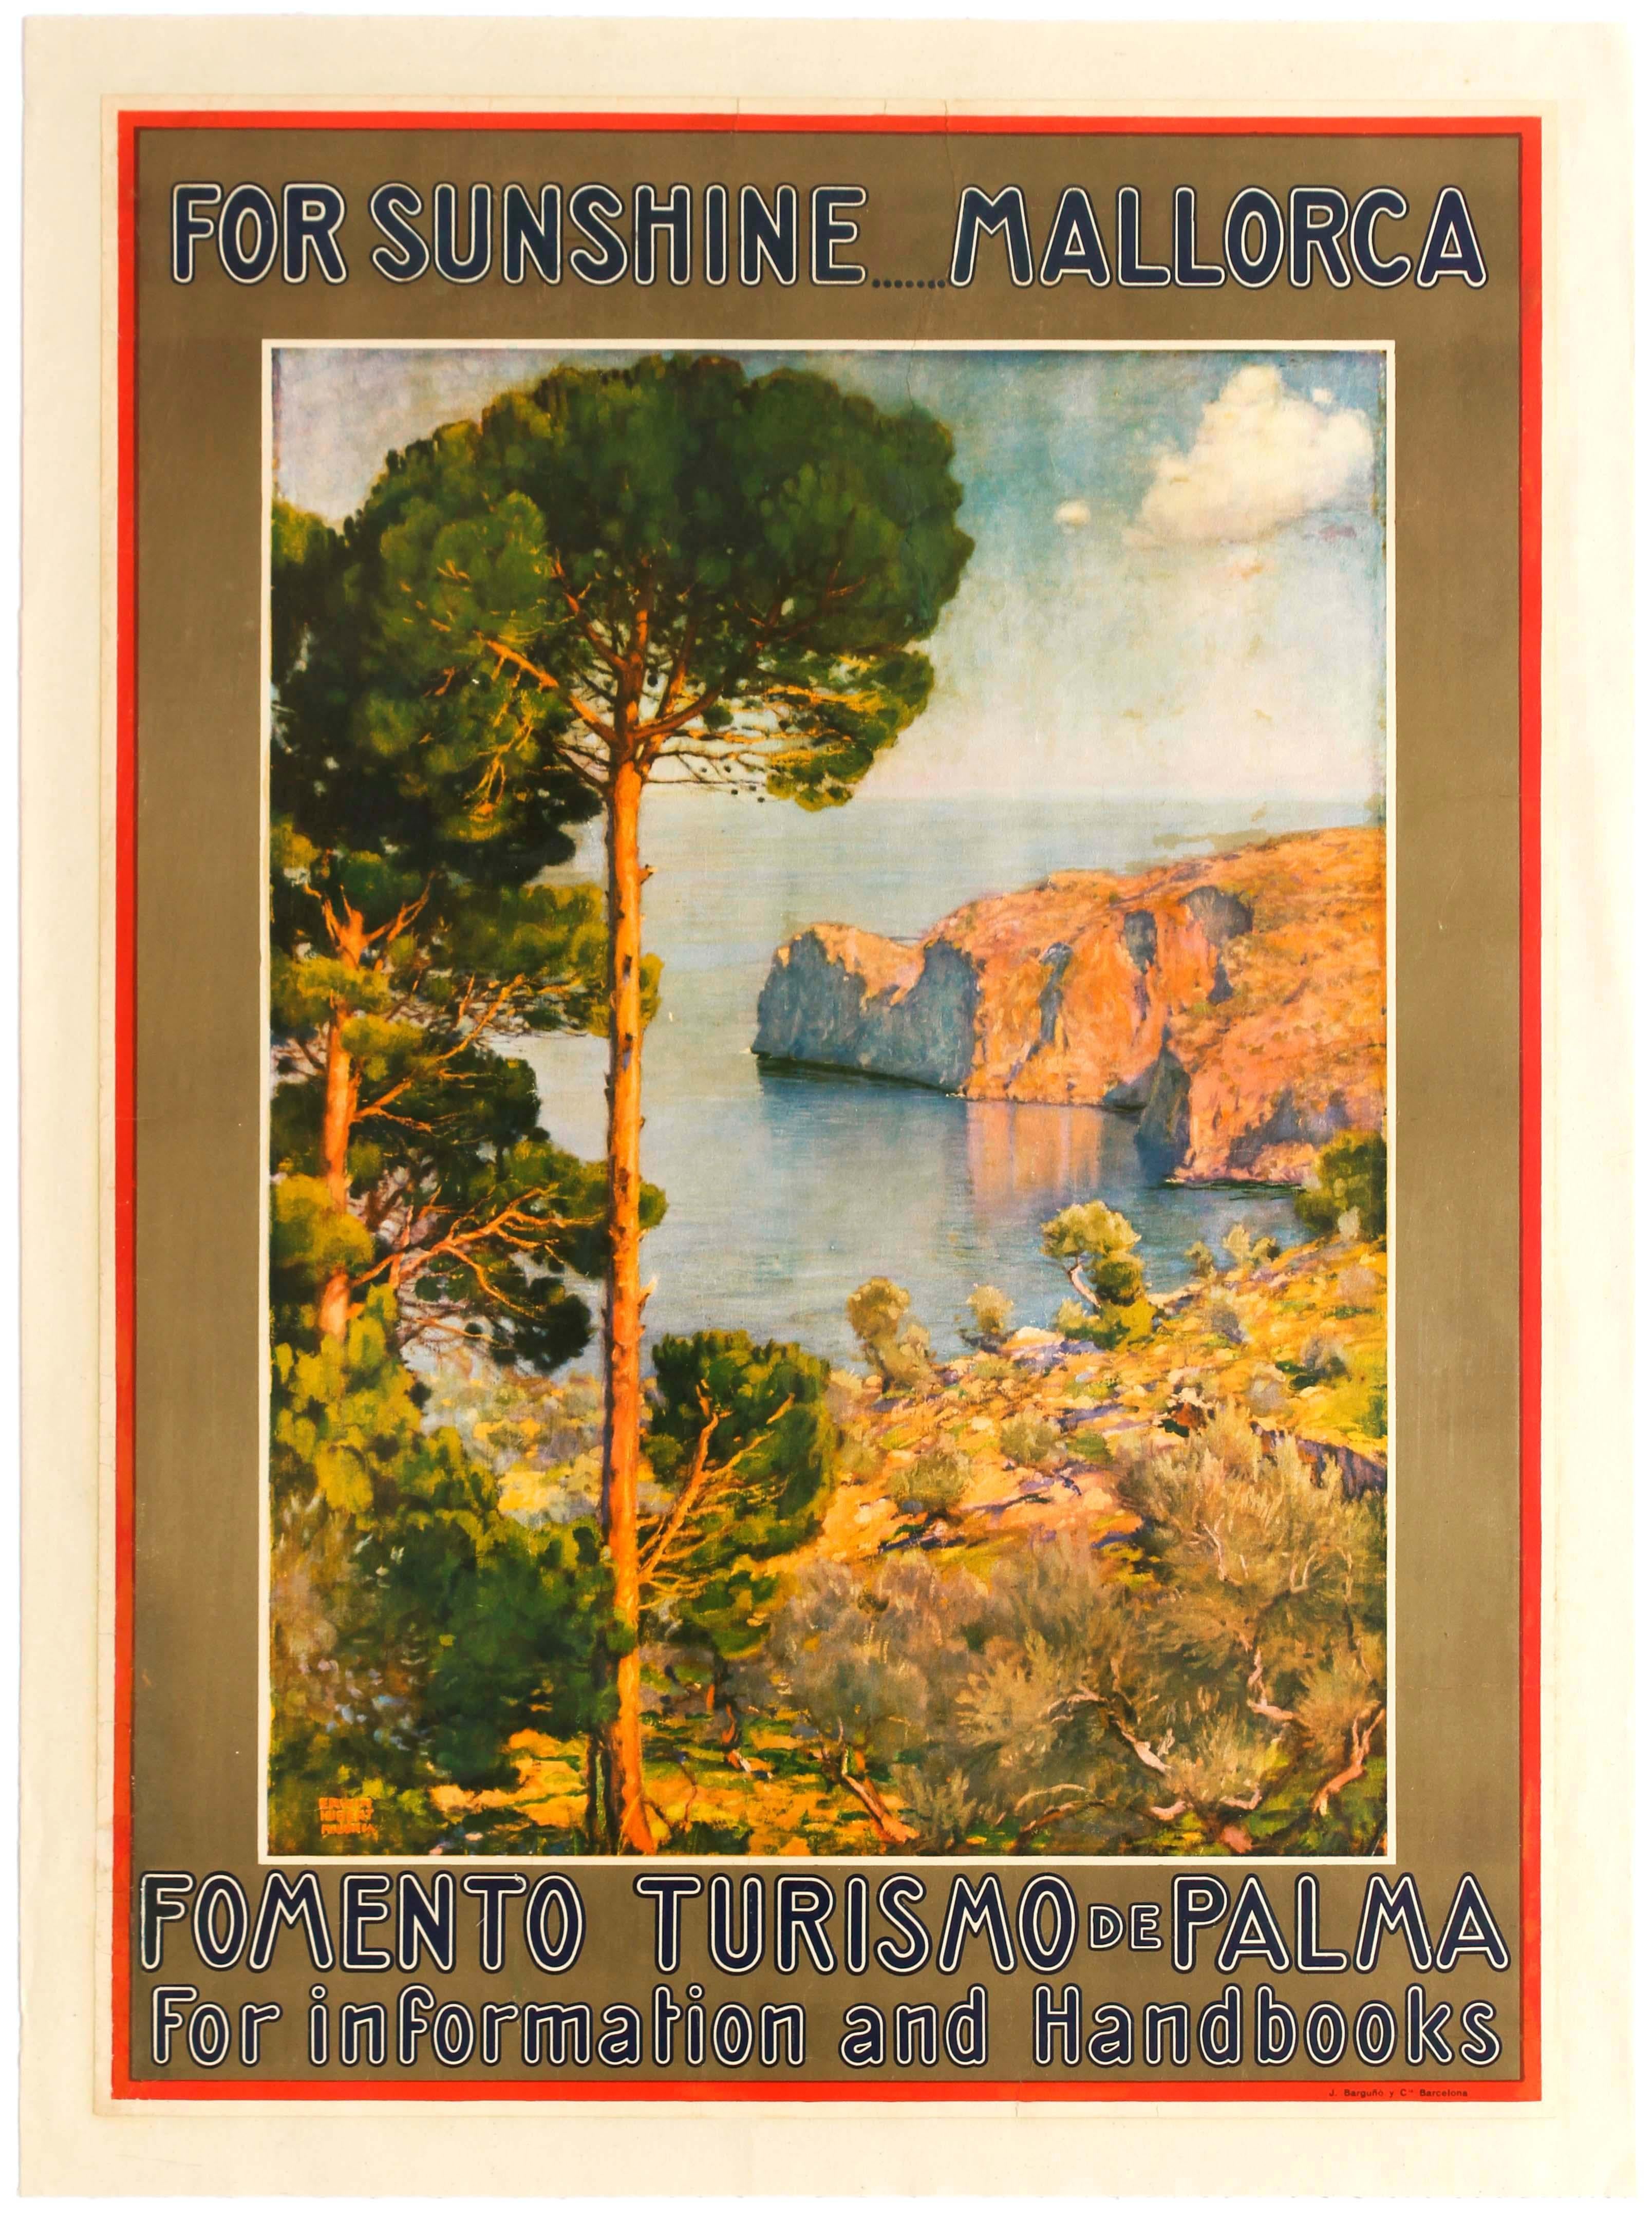 Erwin Hubert Print - Original Vintage Poster - For Sunshine Mallorca - Travel Mediterranean Sea Spain